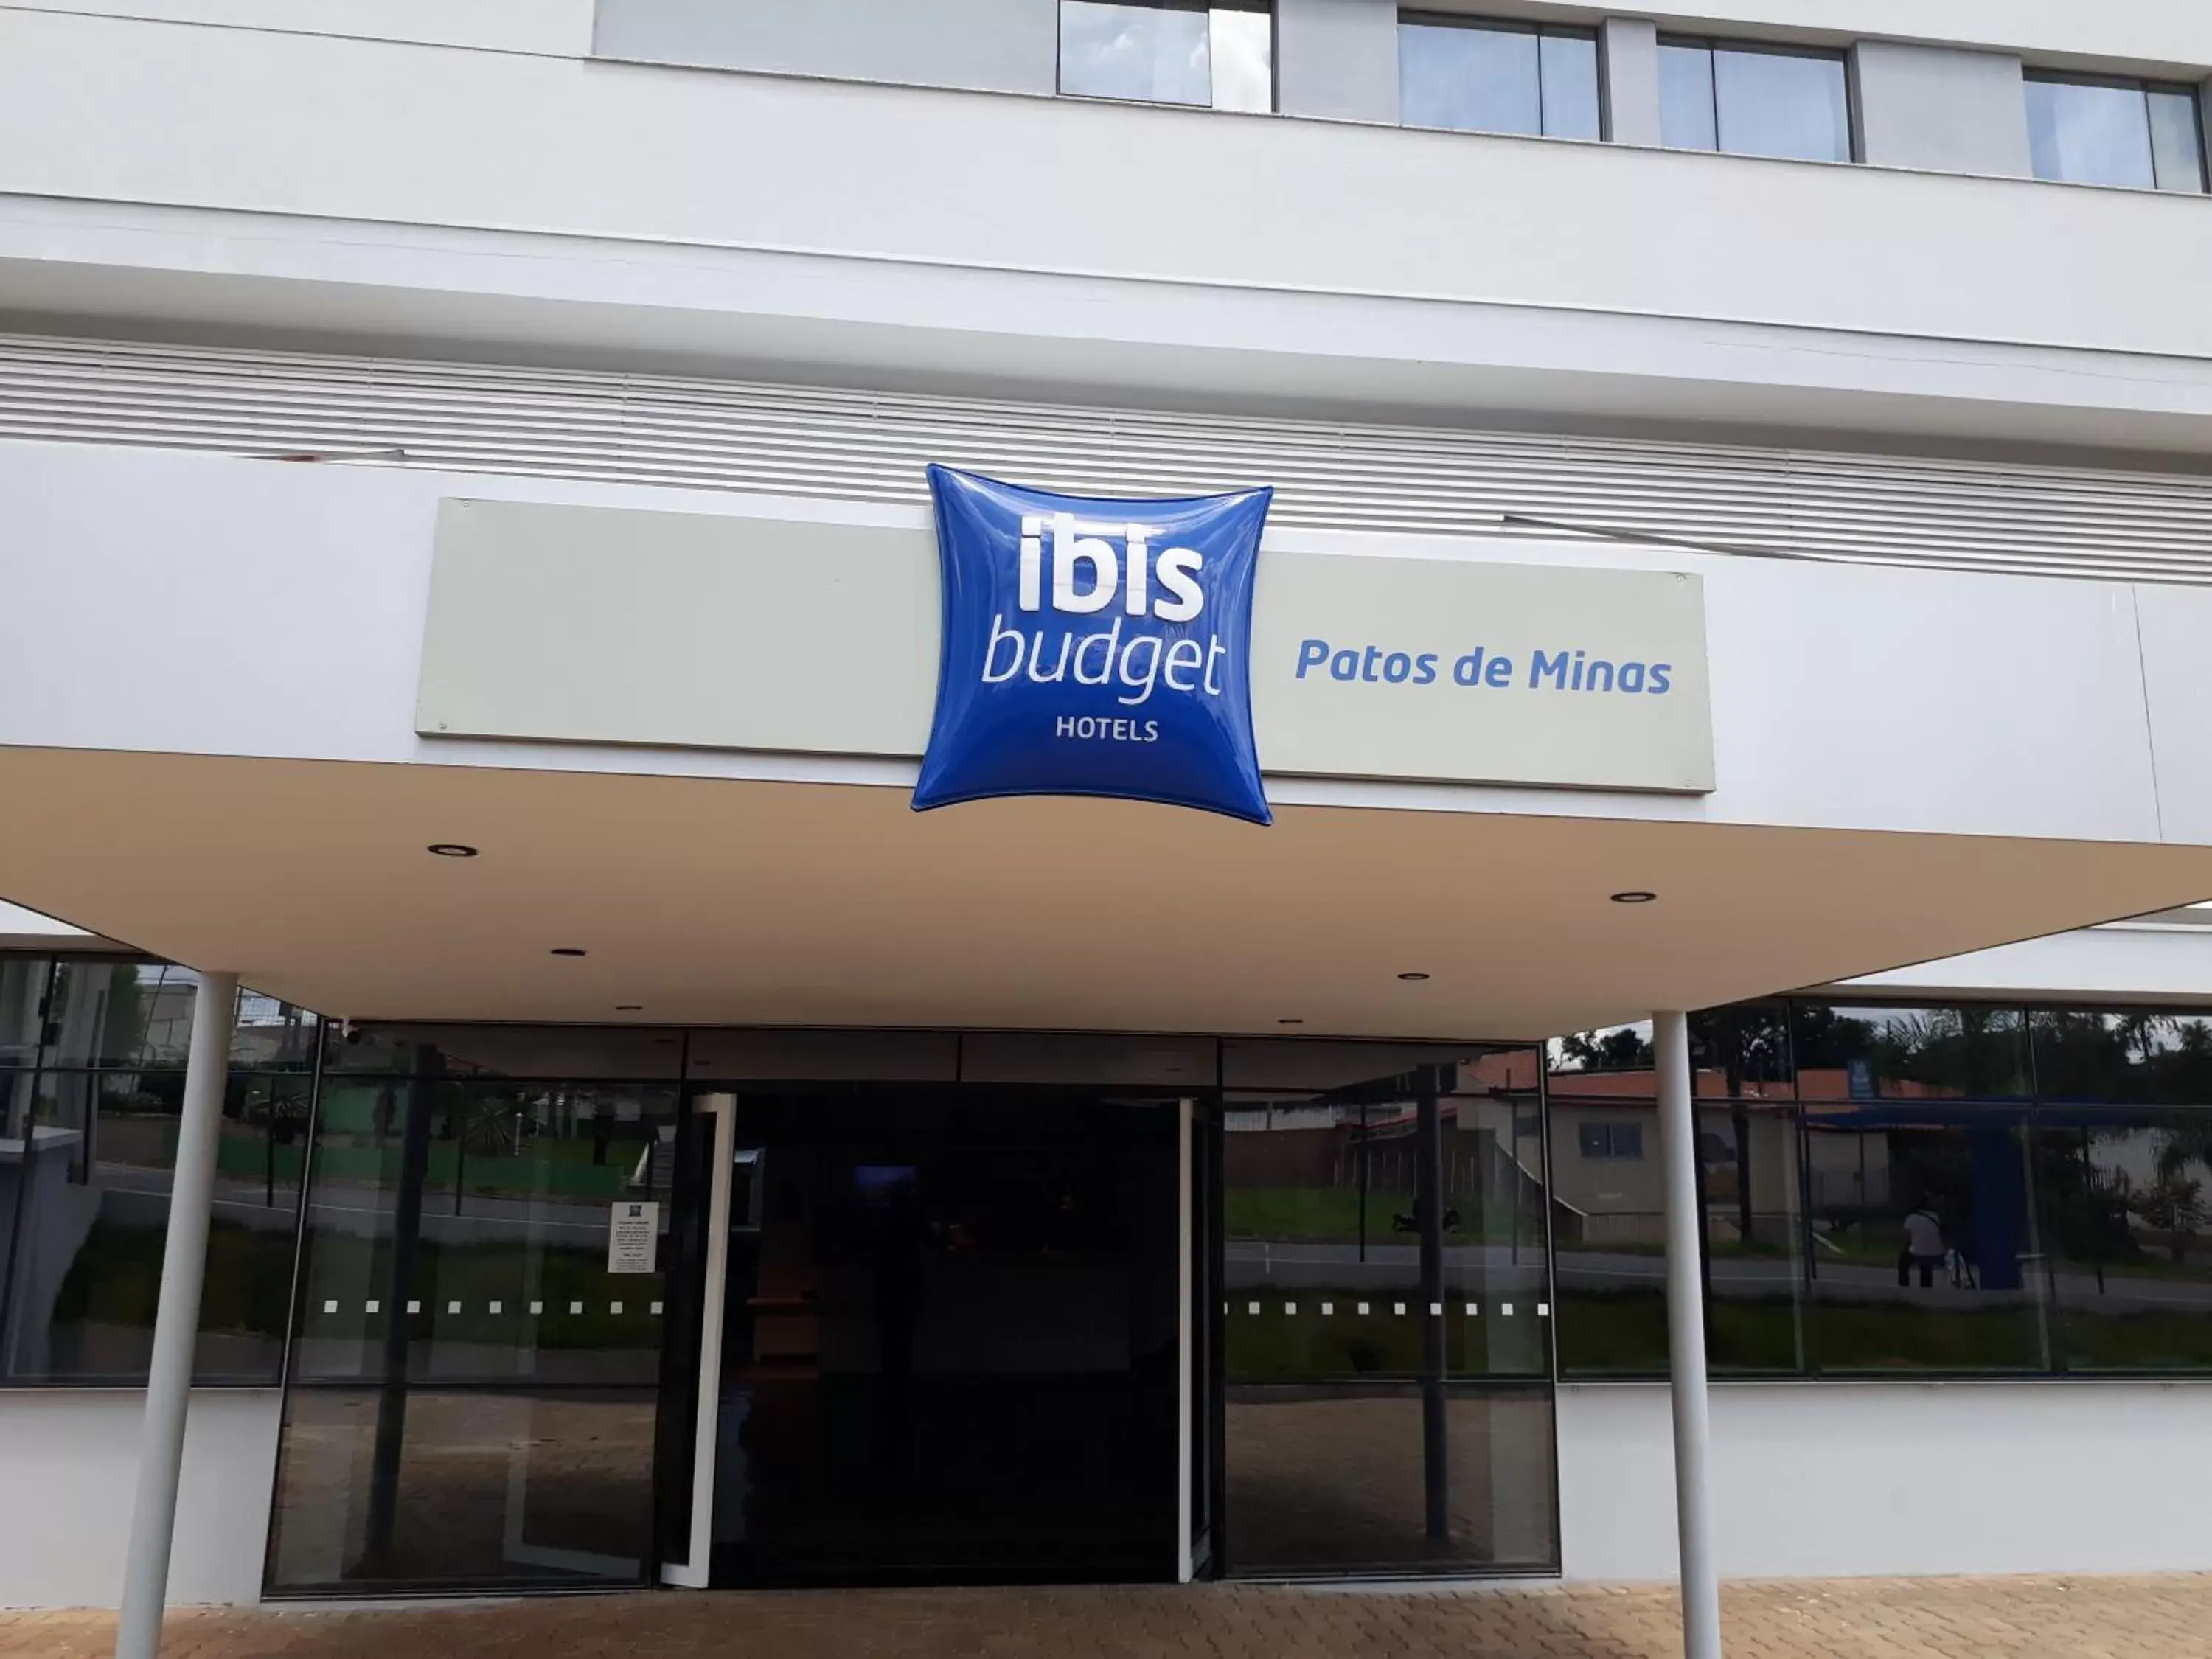 Property logo or sign in ibis budget Patos de Minas